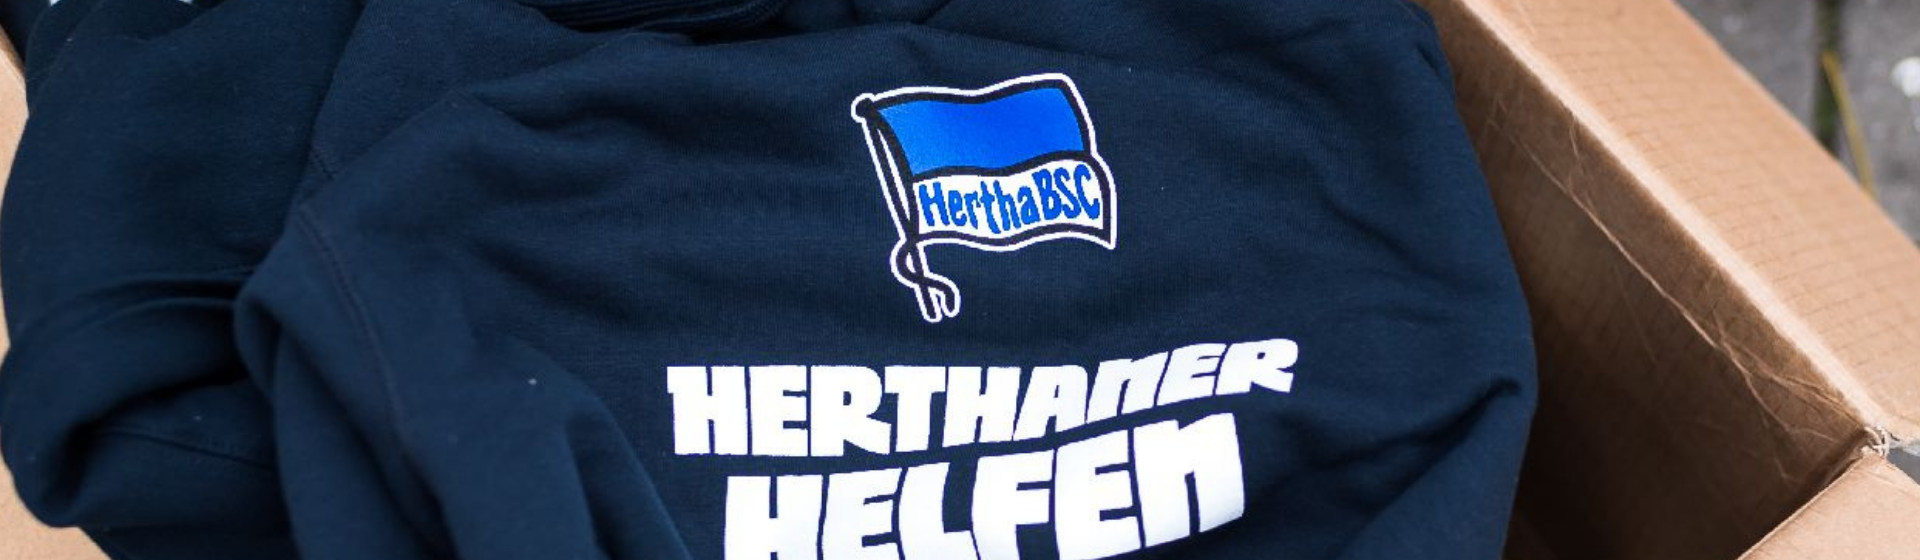 Hertha BSC header